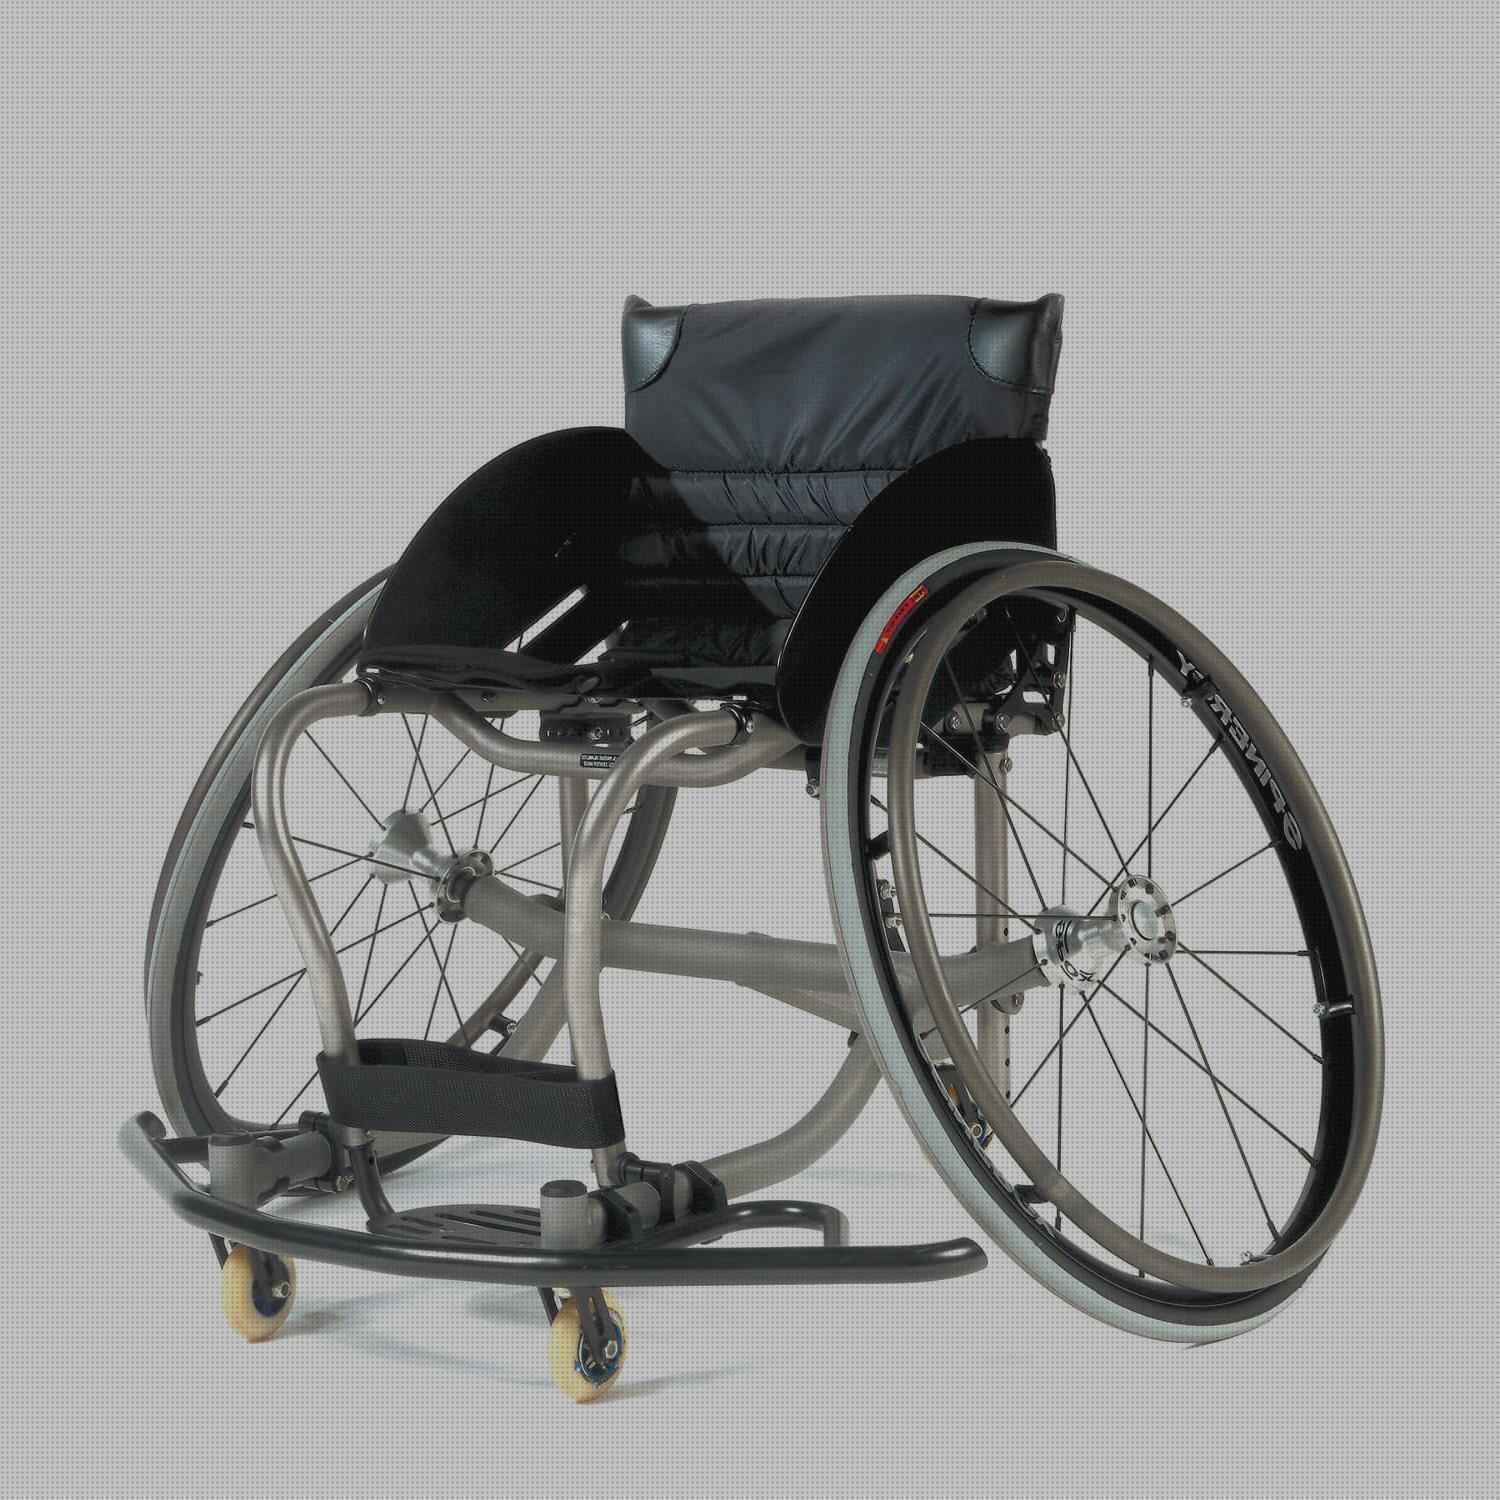 ¿Dónde poder comprar deportivos sillas ruedas silla deportiva de ruedas?